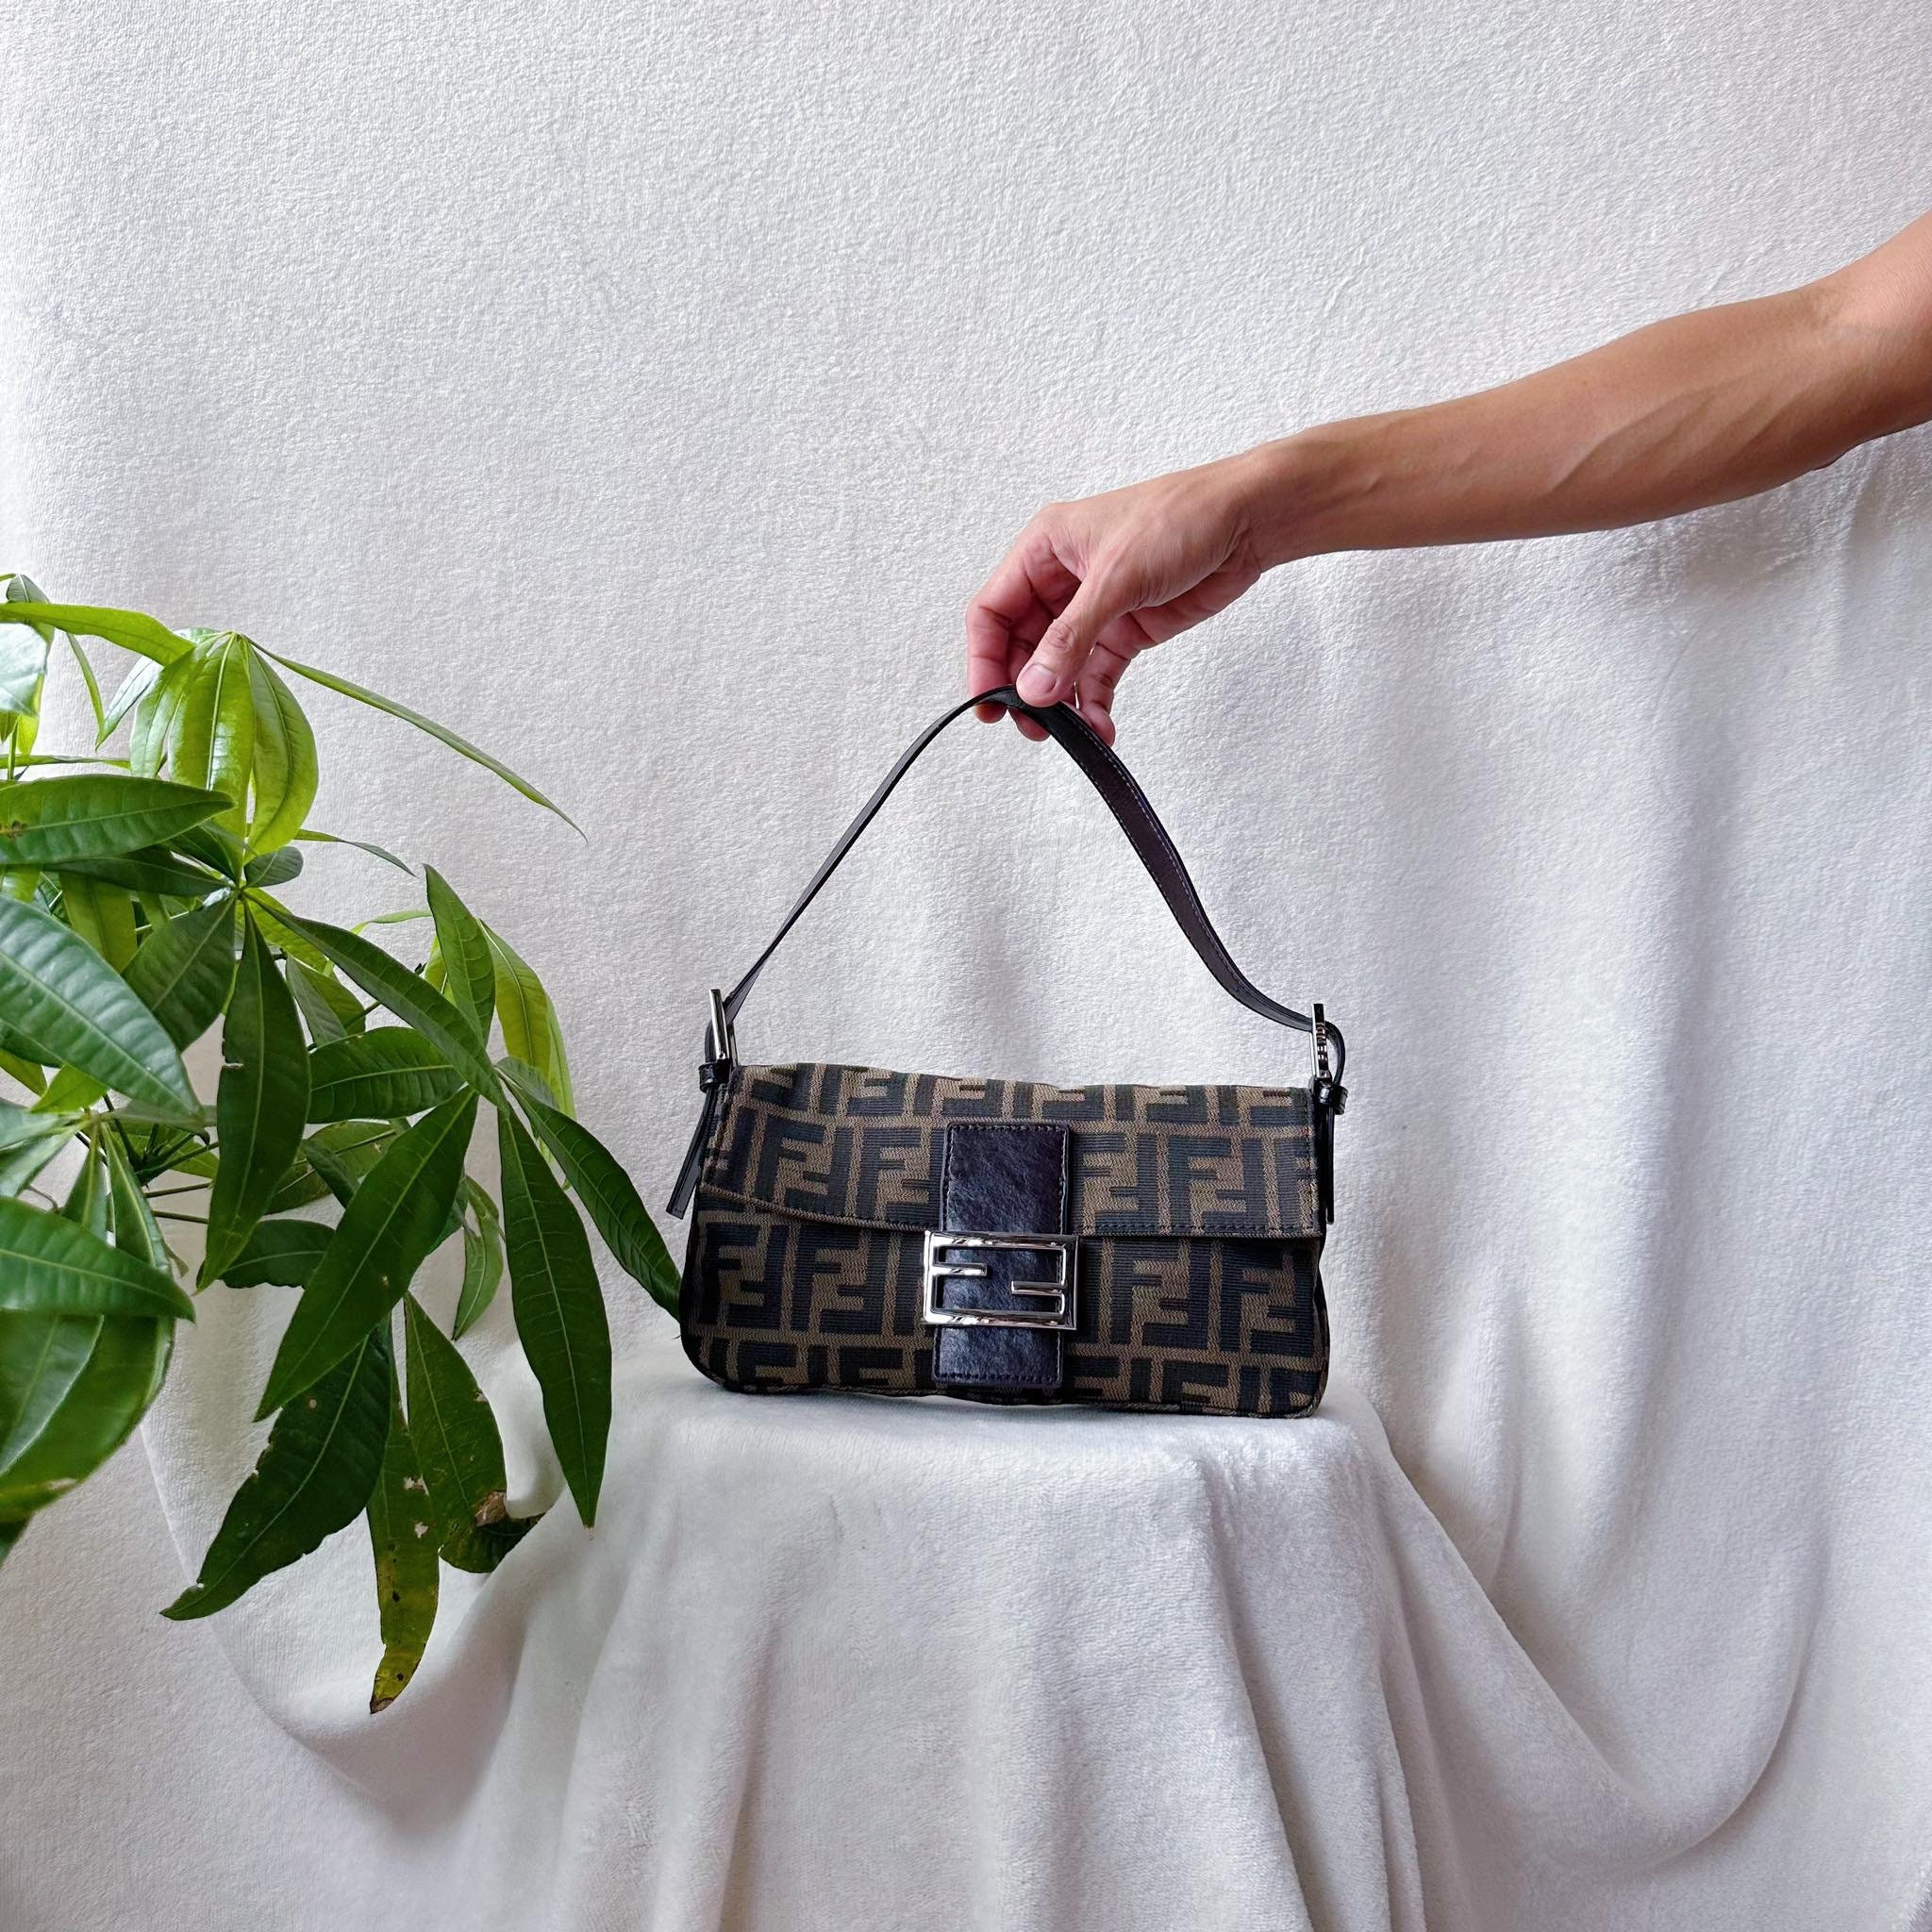 Buy Fendi Shoulder Bag Online In India -  India